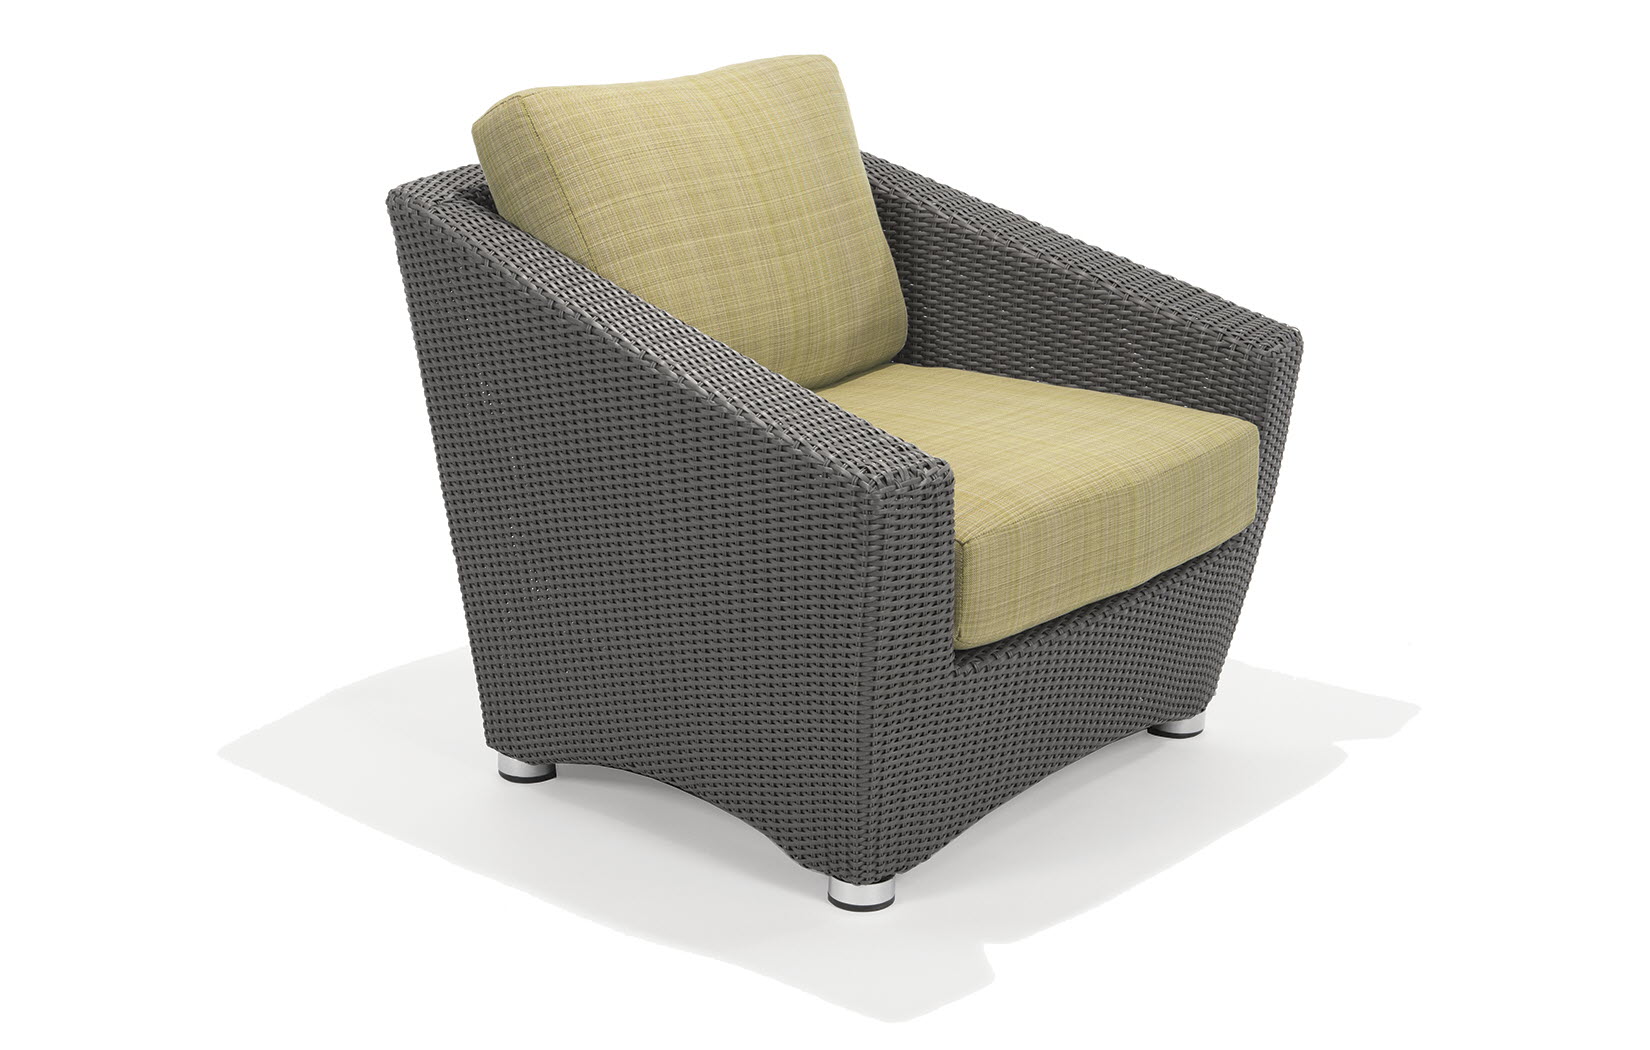 Lantana Collection Modular Outdoor Lounge Chairs